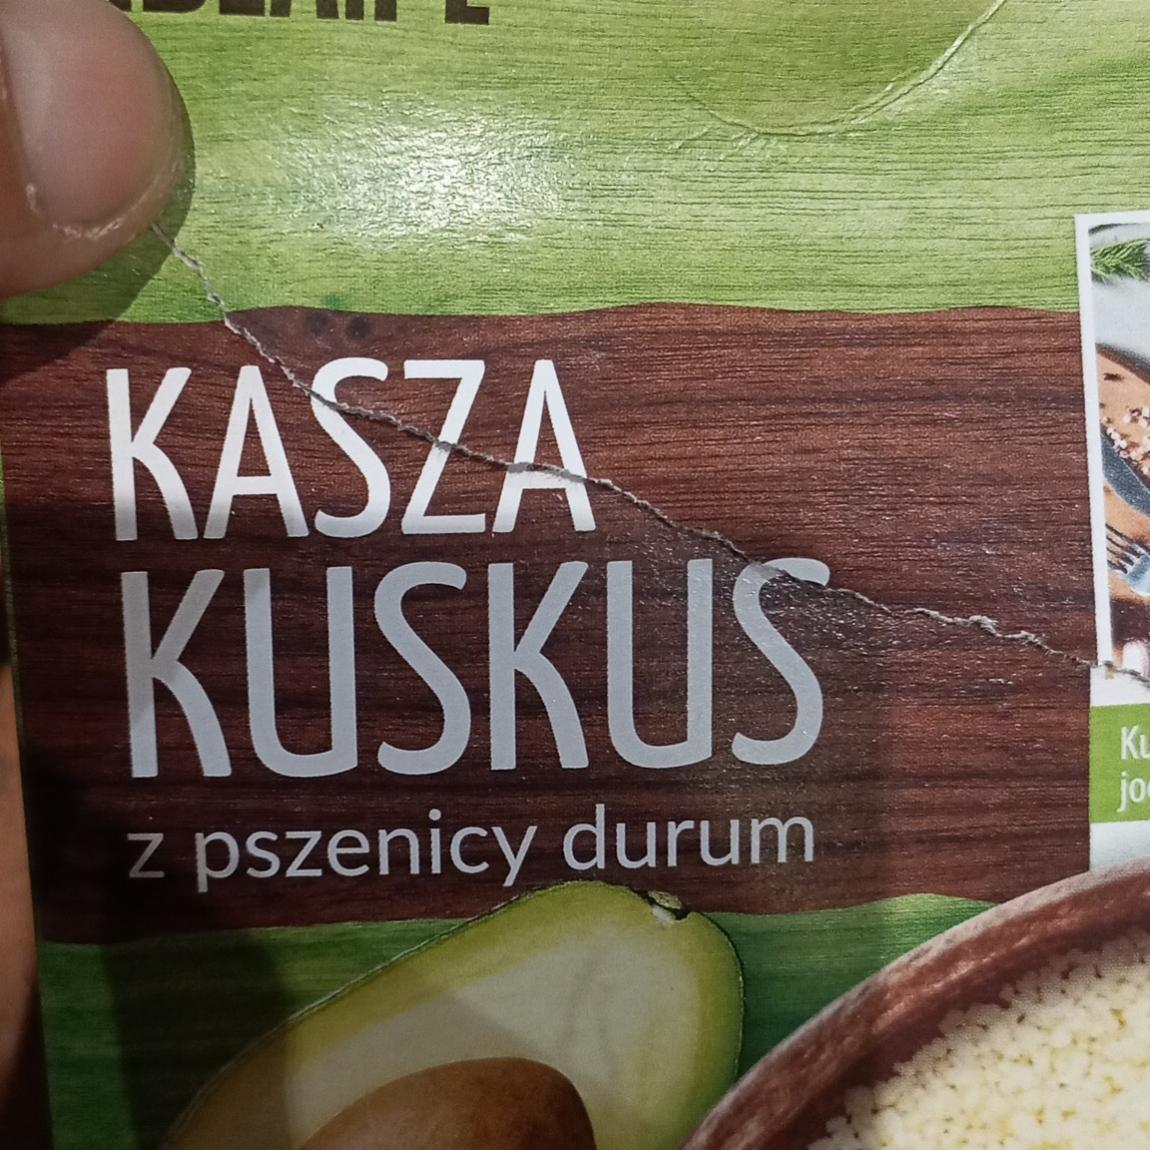 Фото - Kasza kuskus kuchnia Lidla.pl